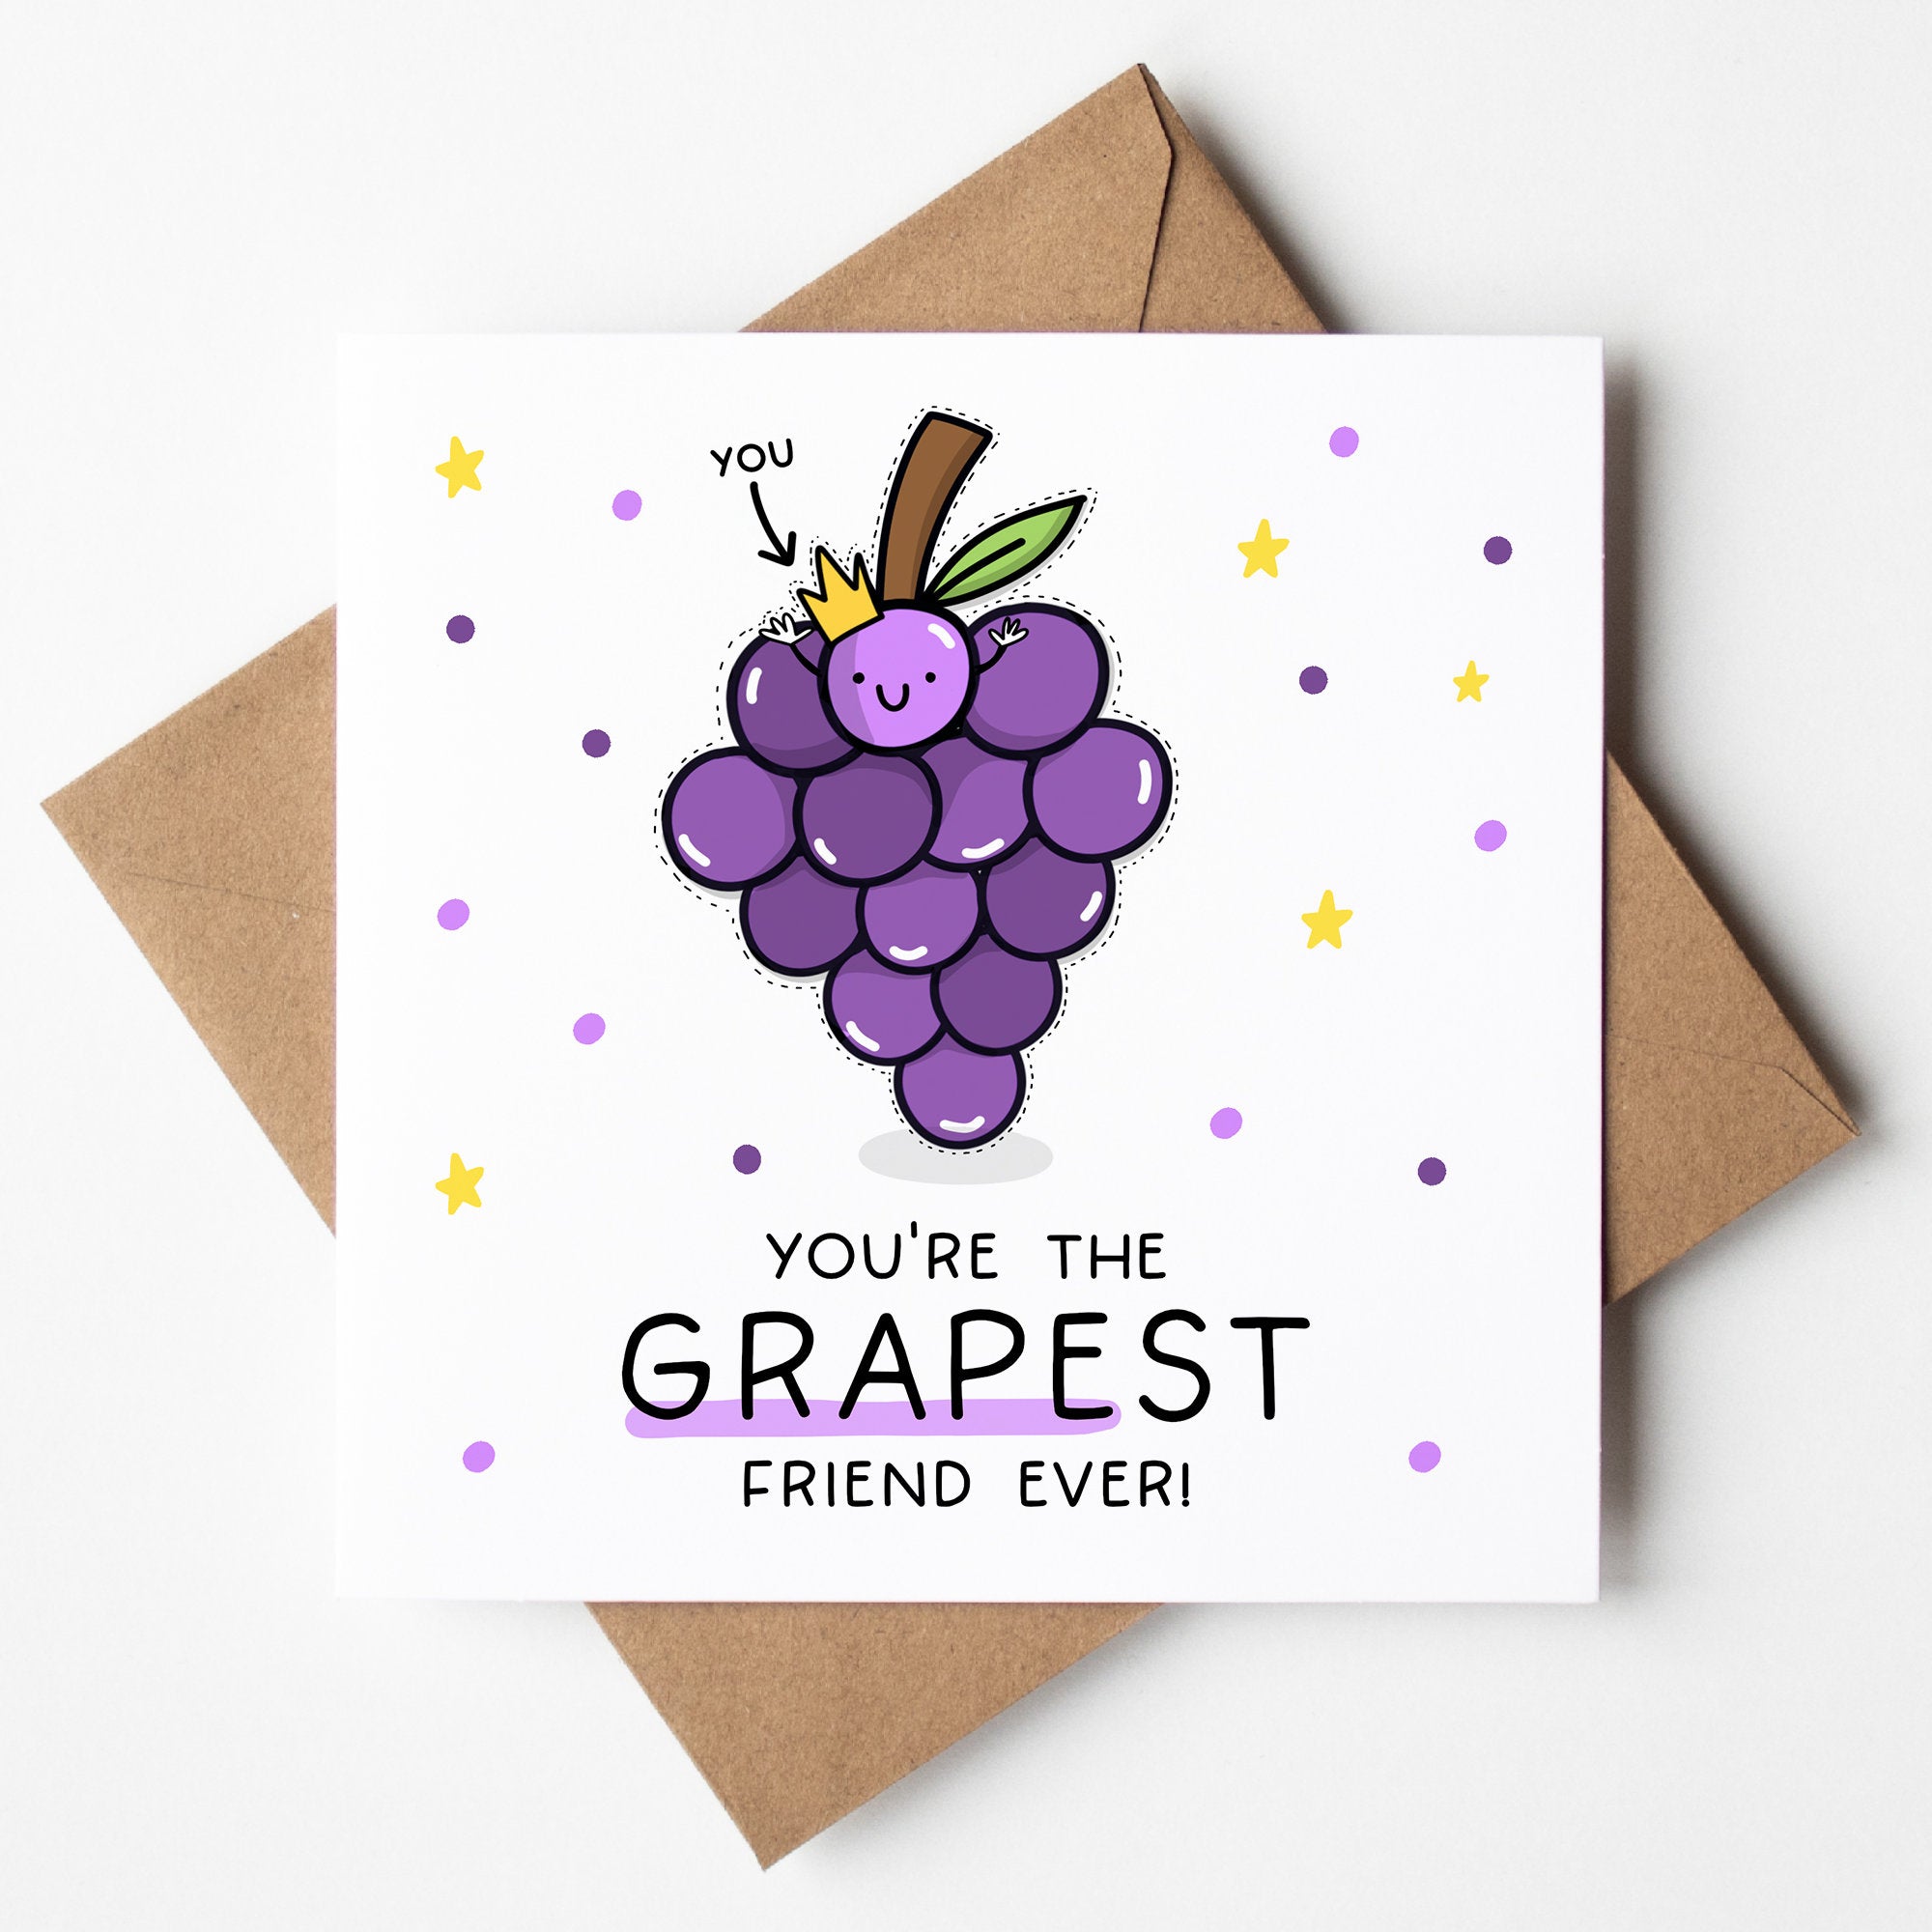 Funny Friendship Cards - Grapest Friend Ever